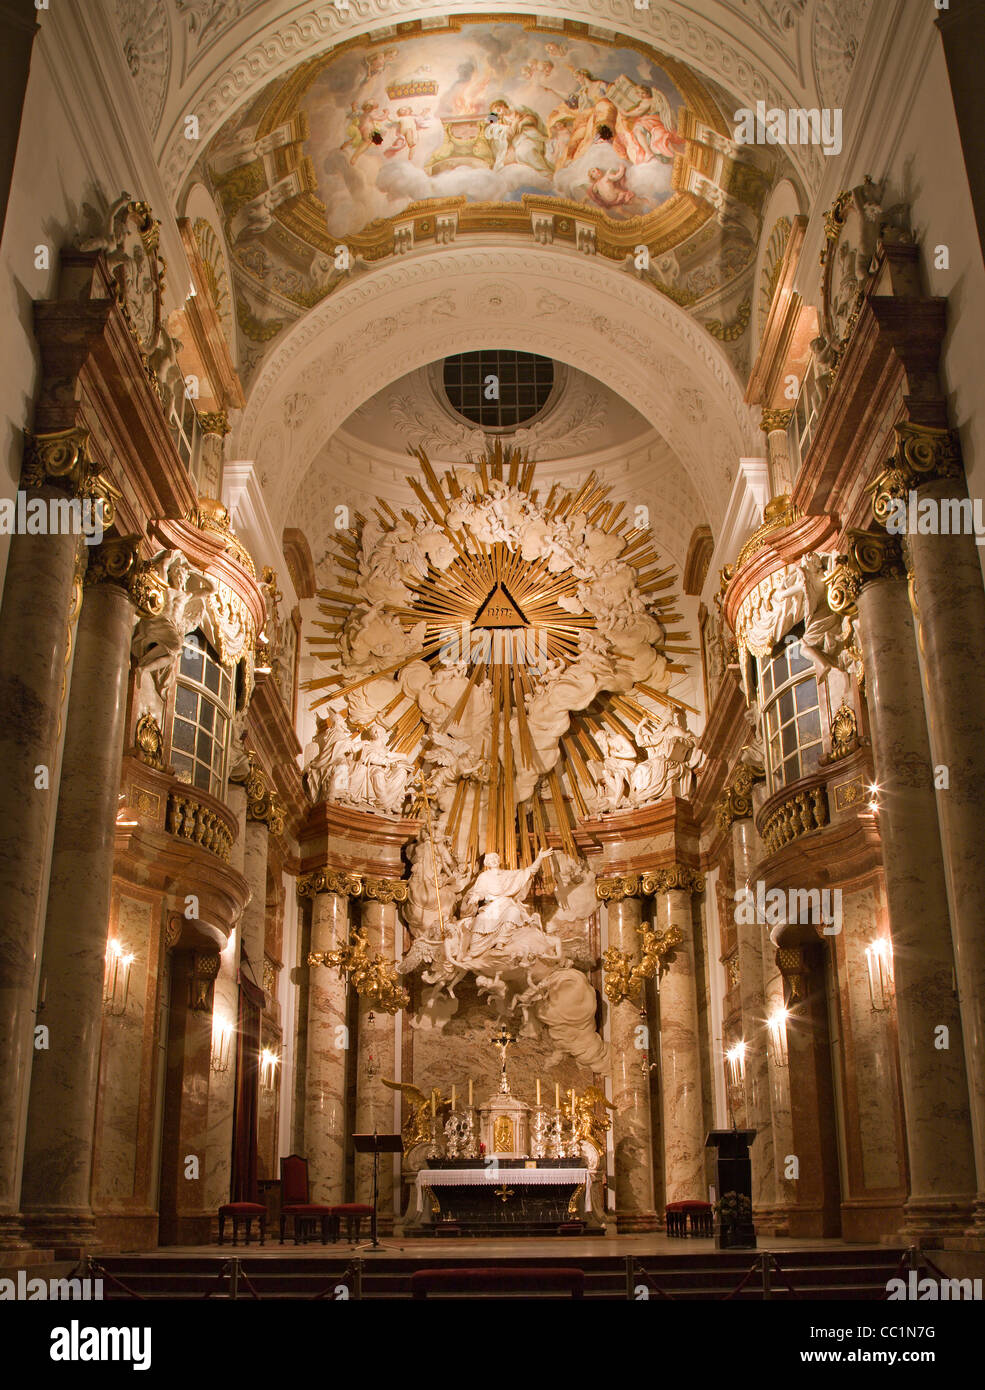 Wien - barocken Altar von st. Charles Boromeo Kirche Stockfoto